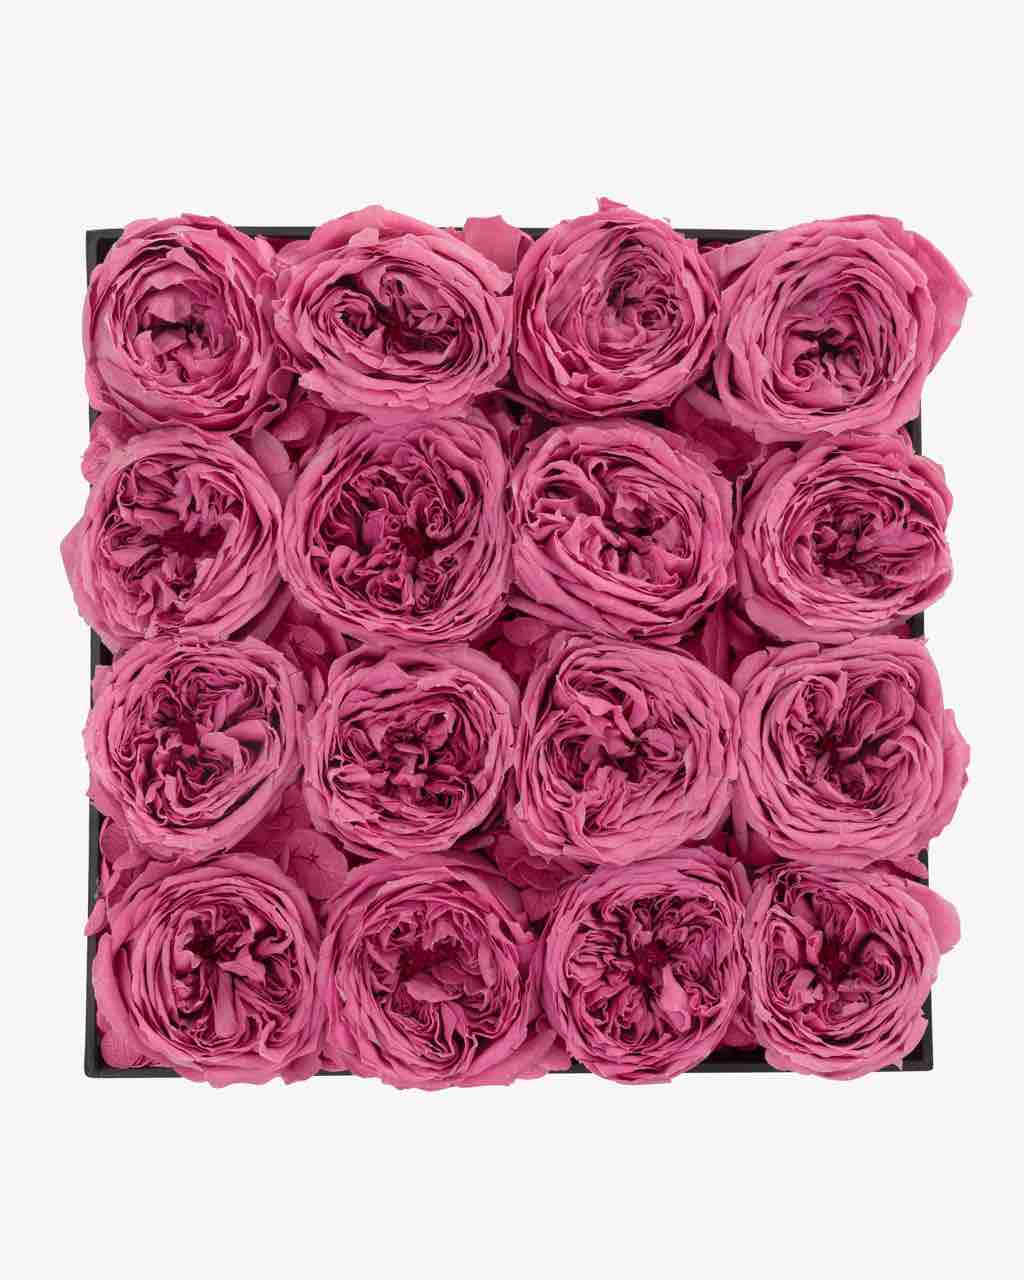 Garden Rose - Medium Luxury Box